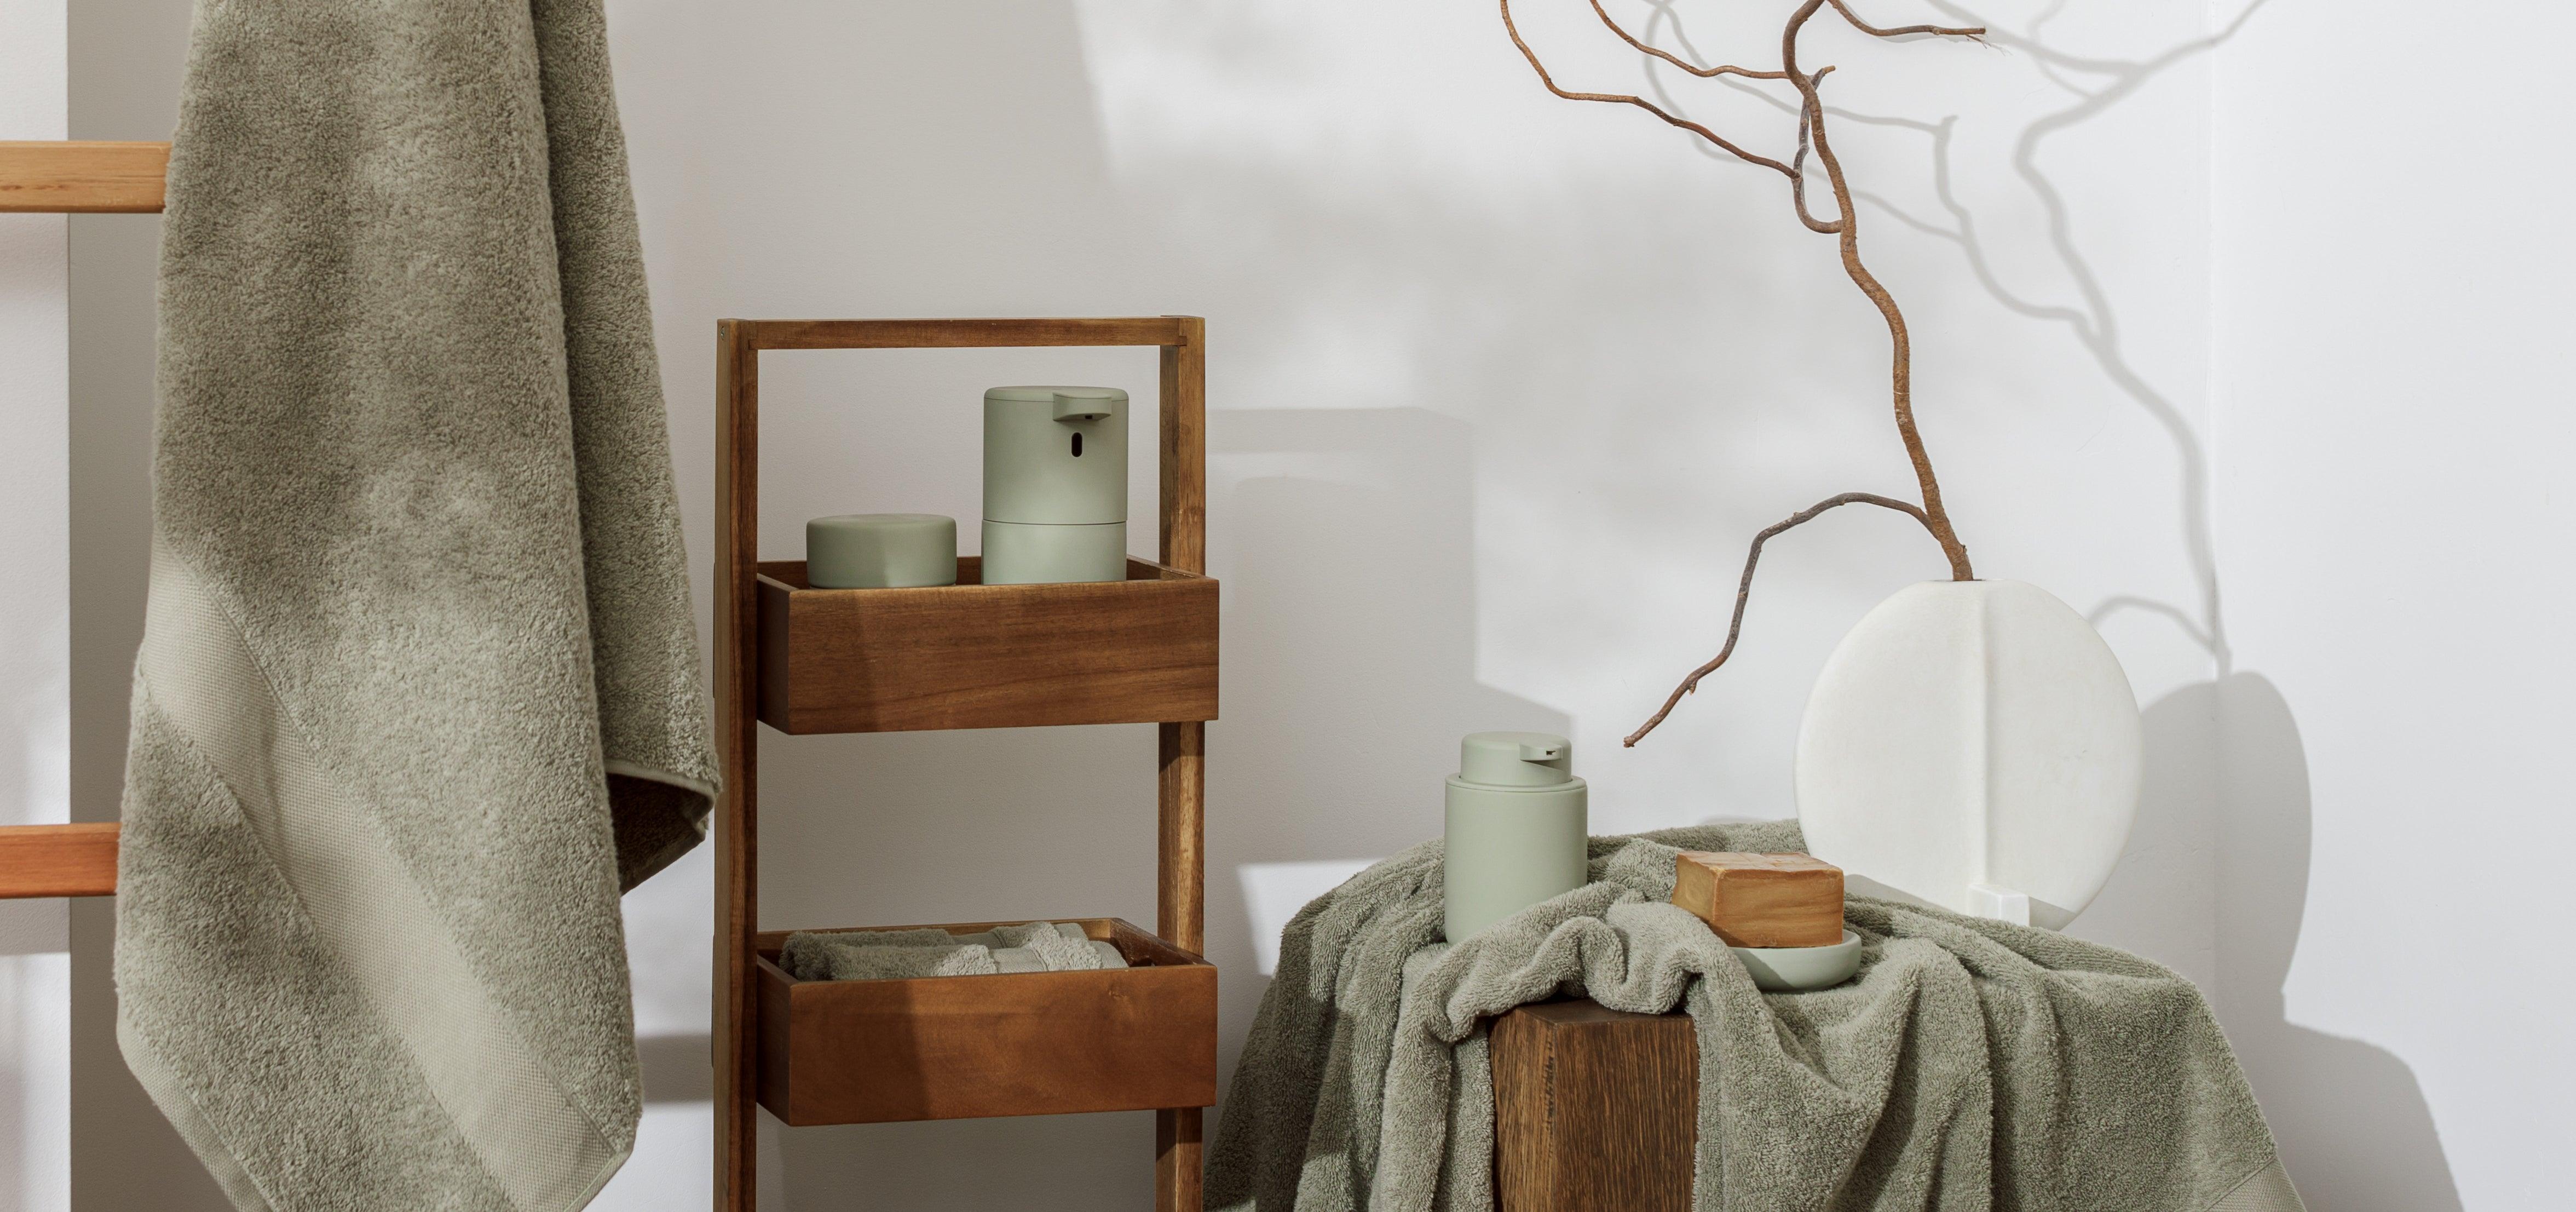 BATH TOWELS - Mademoiselle Home Decor & Furniture Store